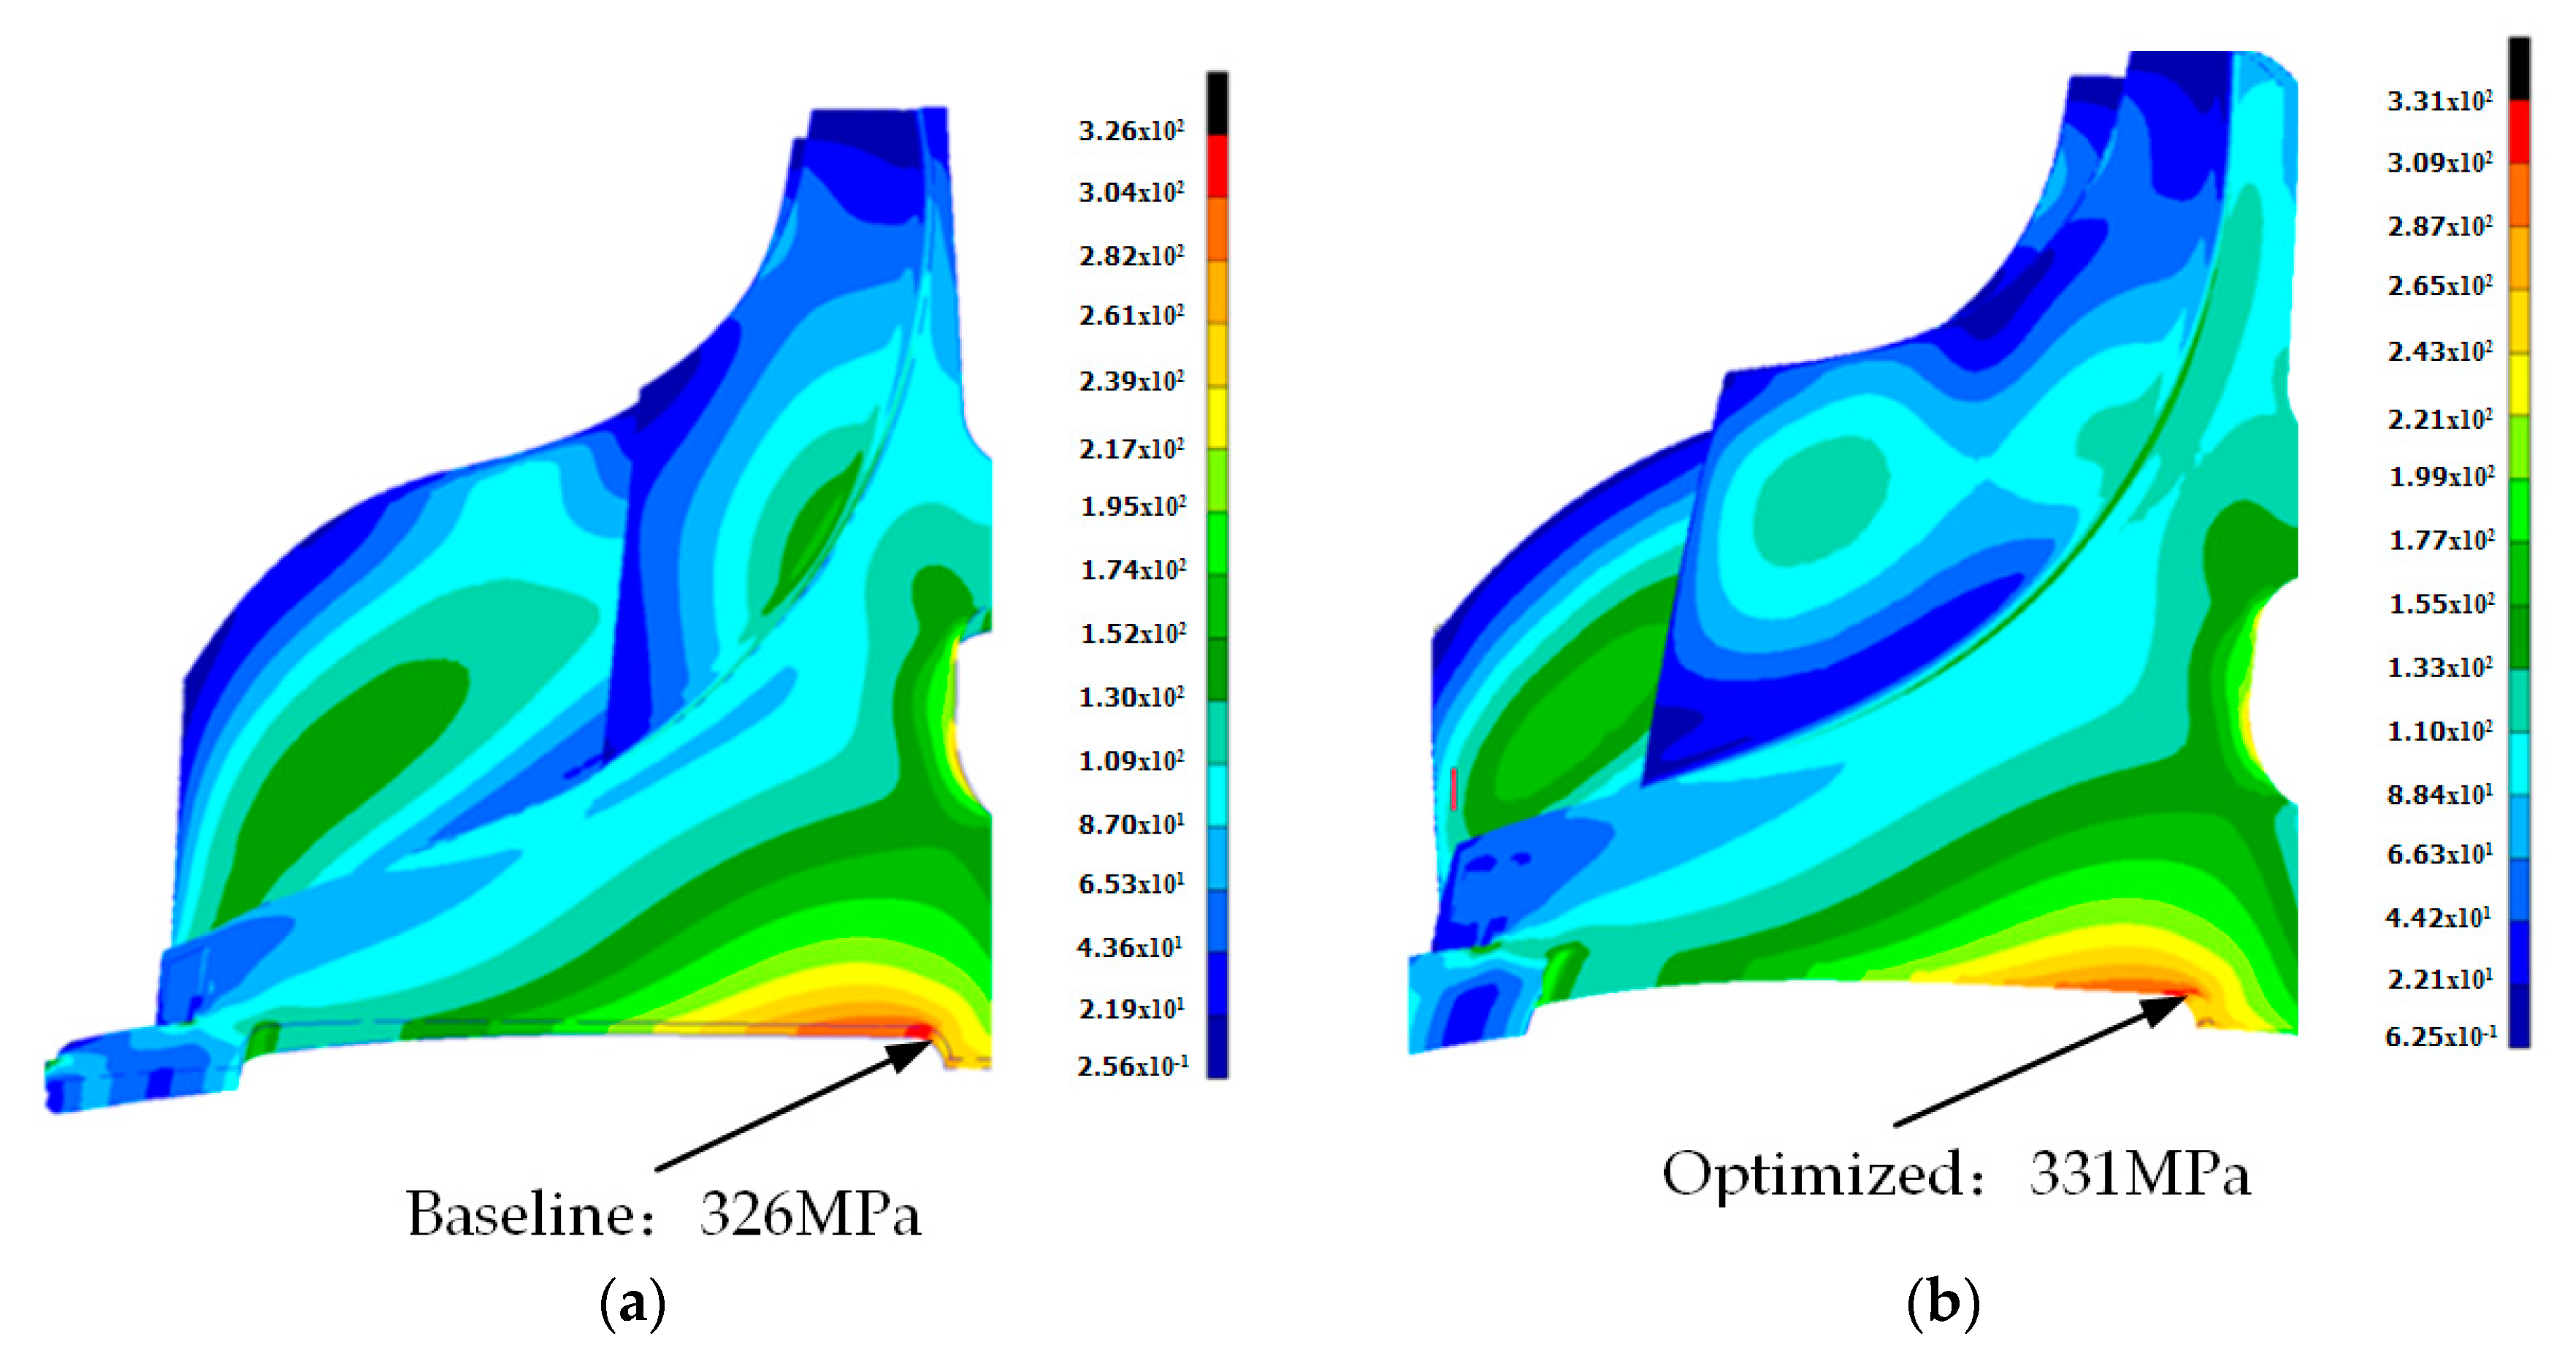 compressor aerodynamics cumpsty pdf files